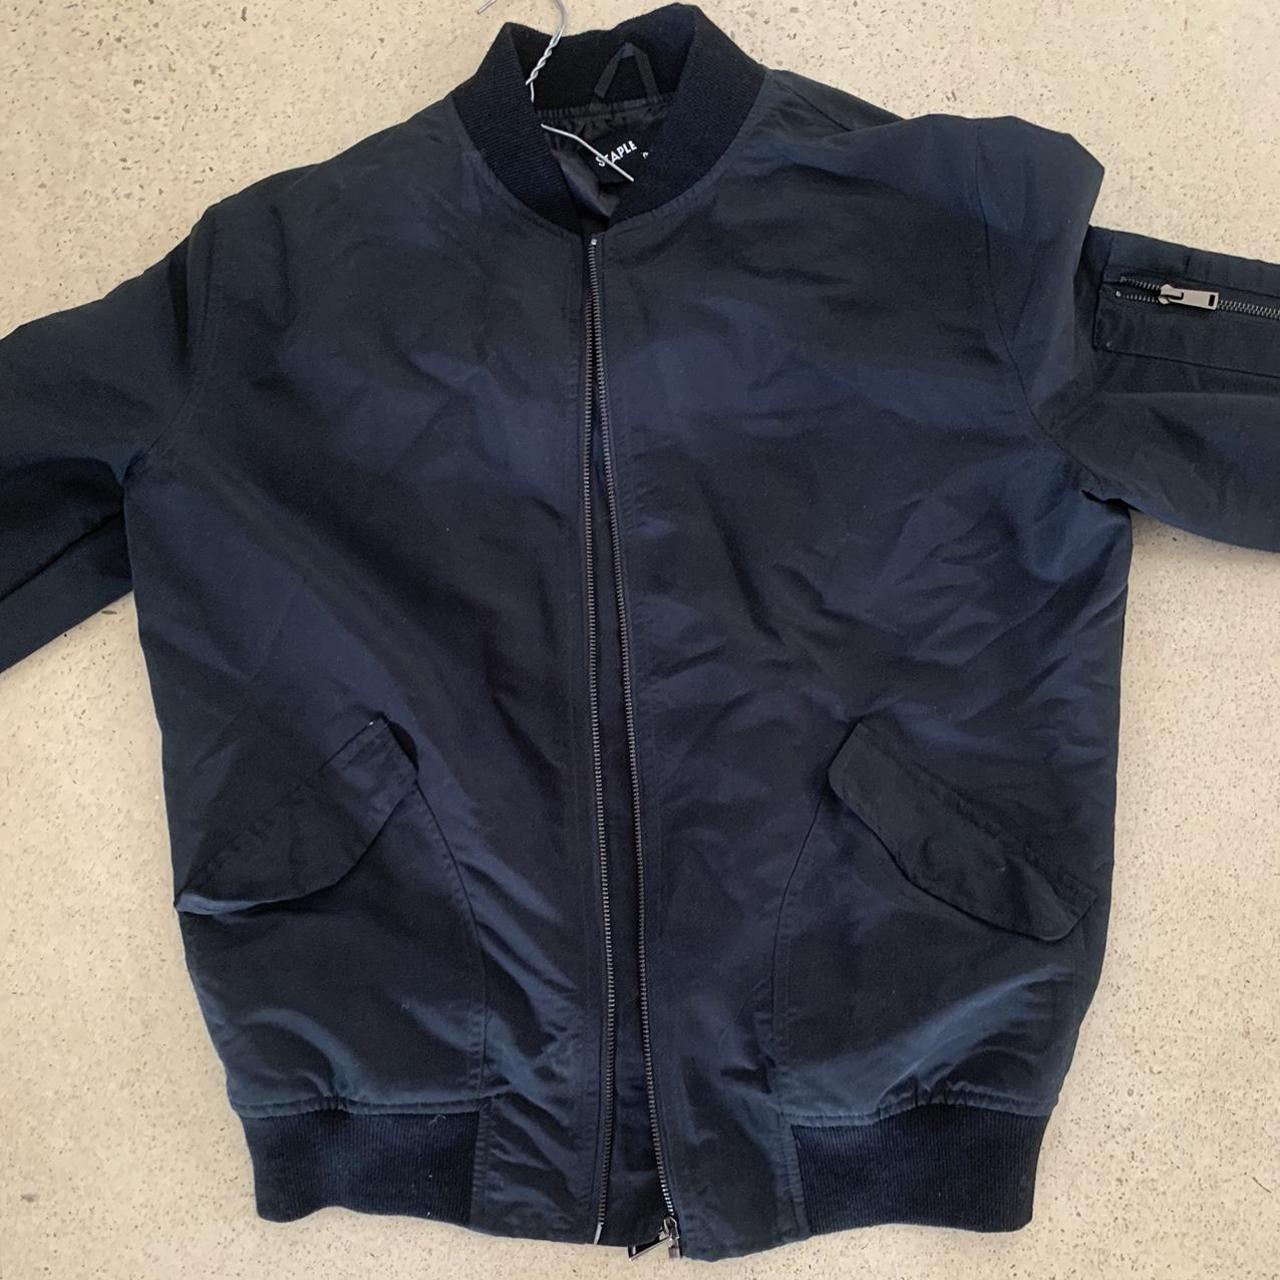 Black ASOS bomber jacket. Great condition, hardly worn - Depop